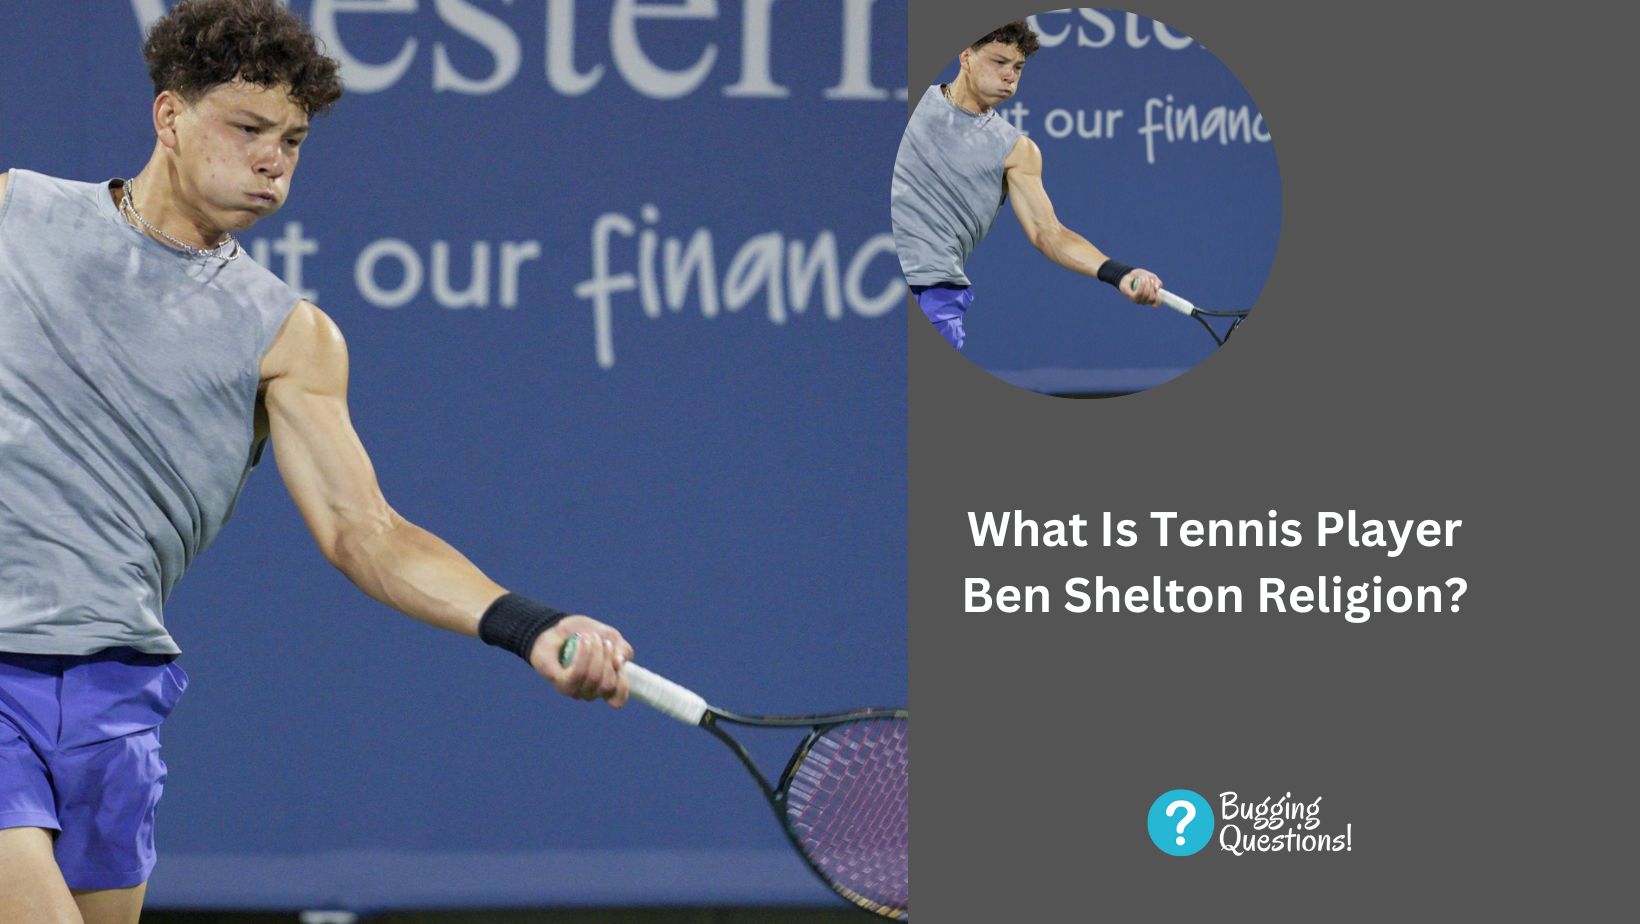 What Is Tennis Player Ben Shelton Religion?